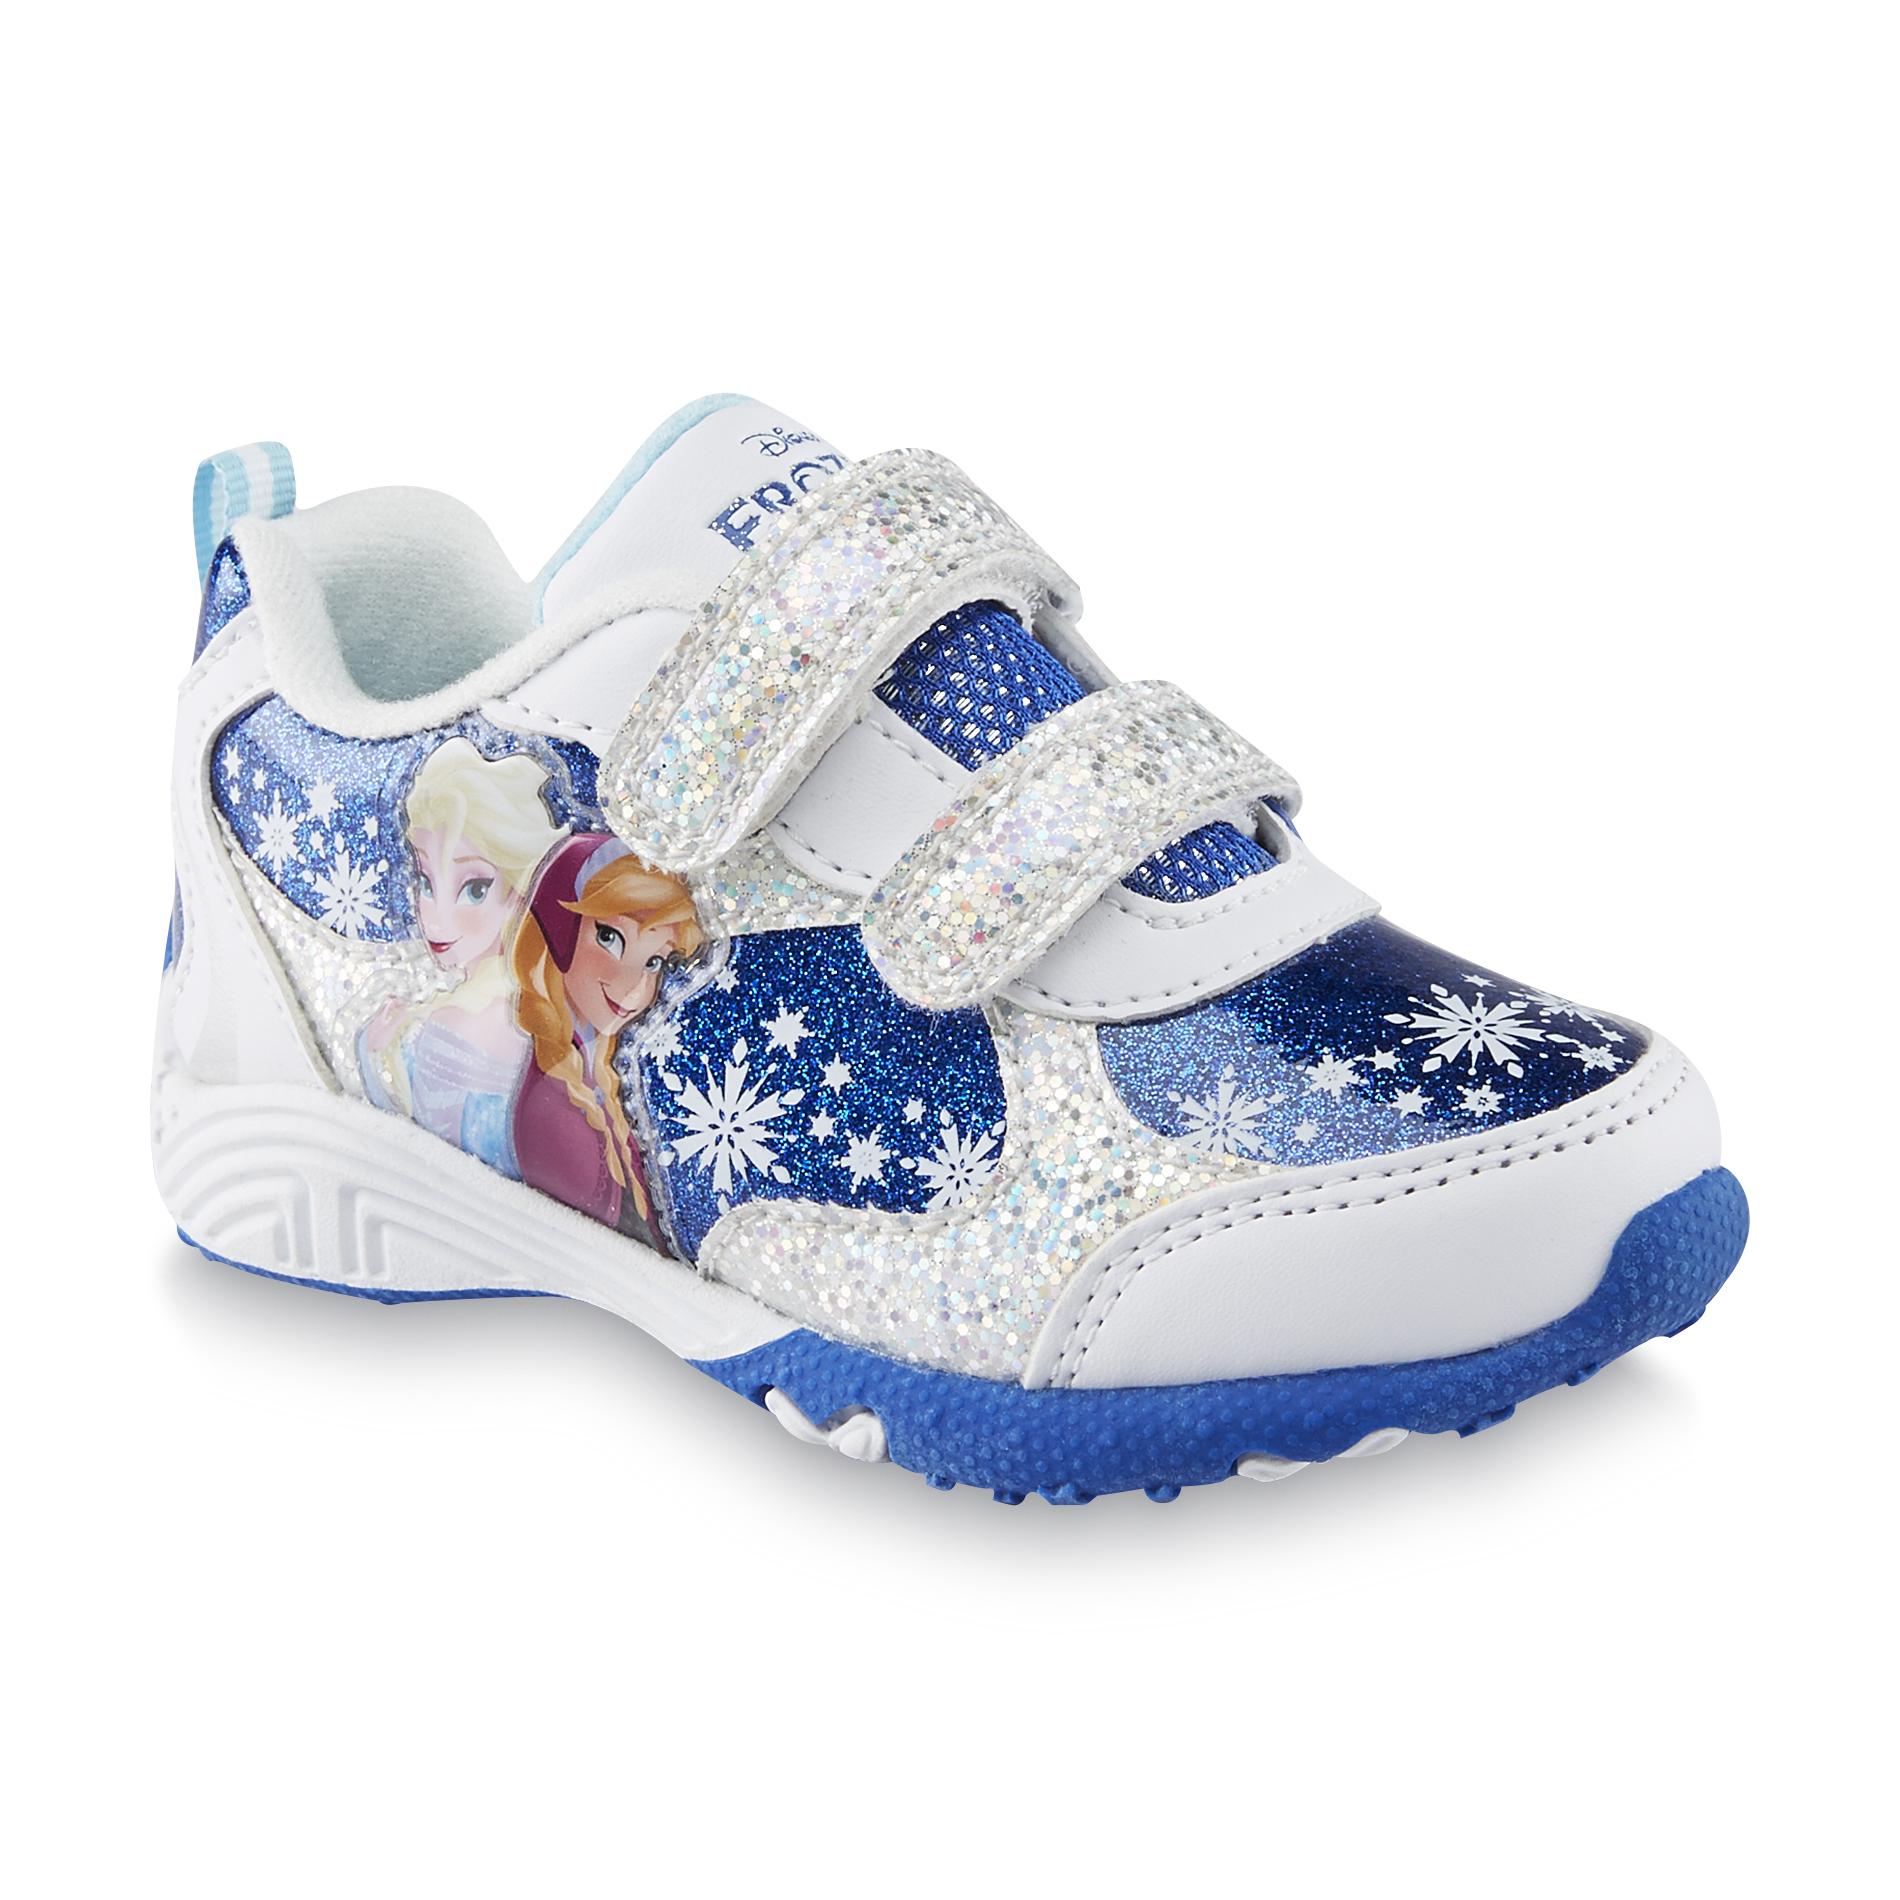 Disney Toddler Girl's Frozen White/Blue Sparkle Athletic Shoe